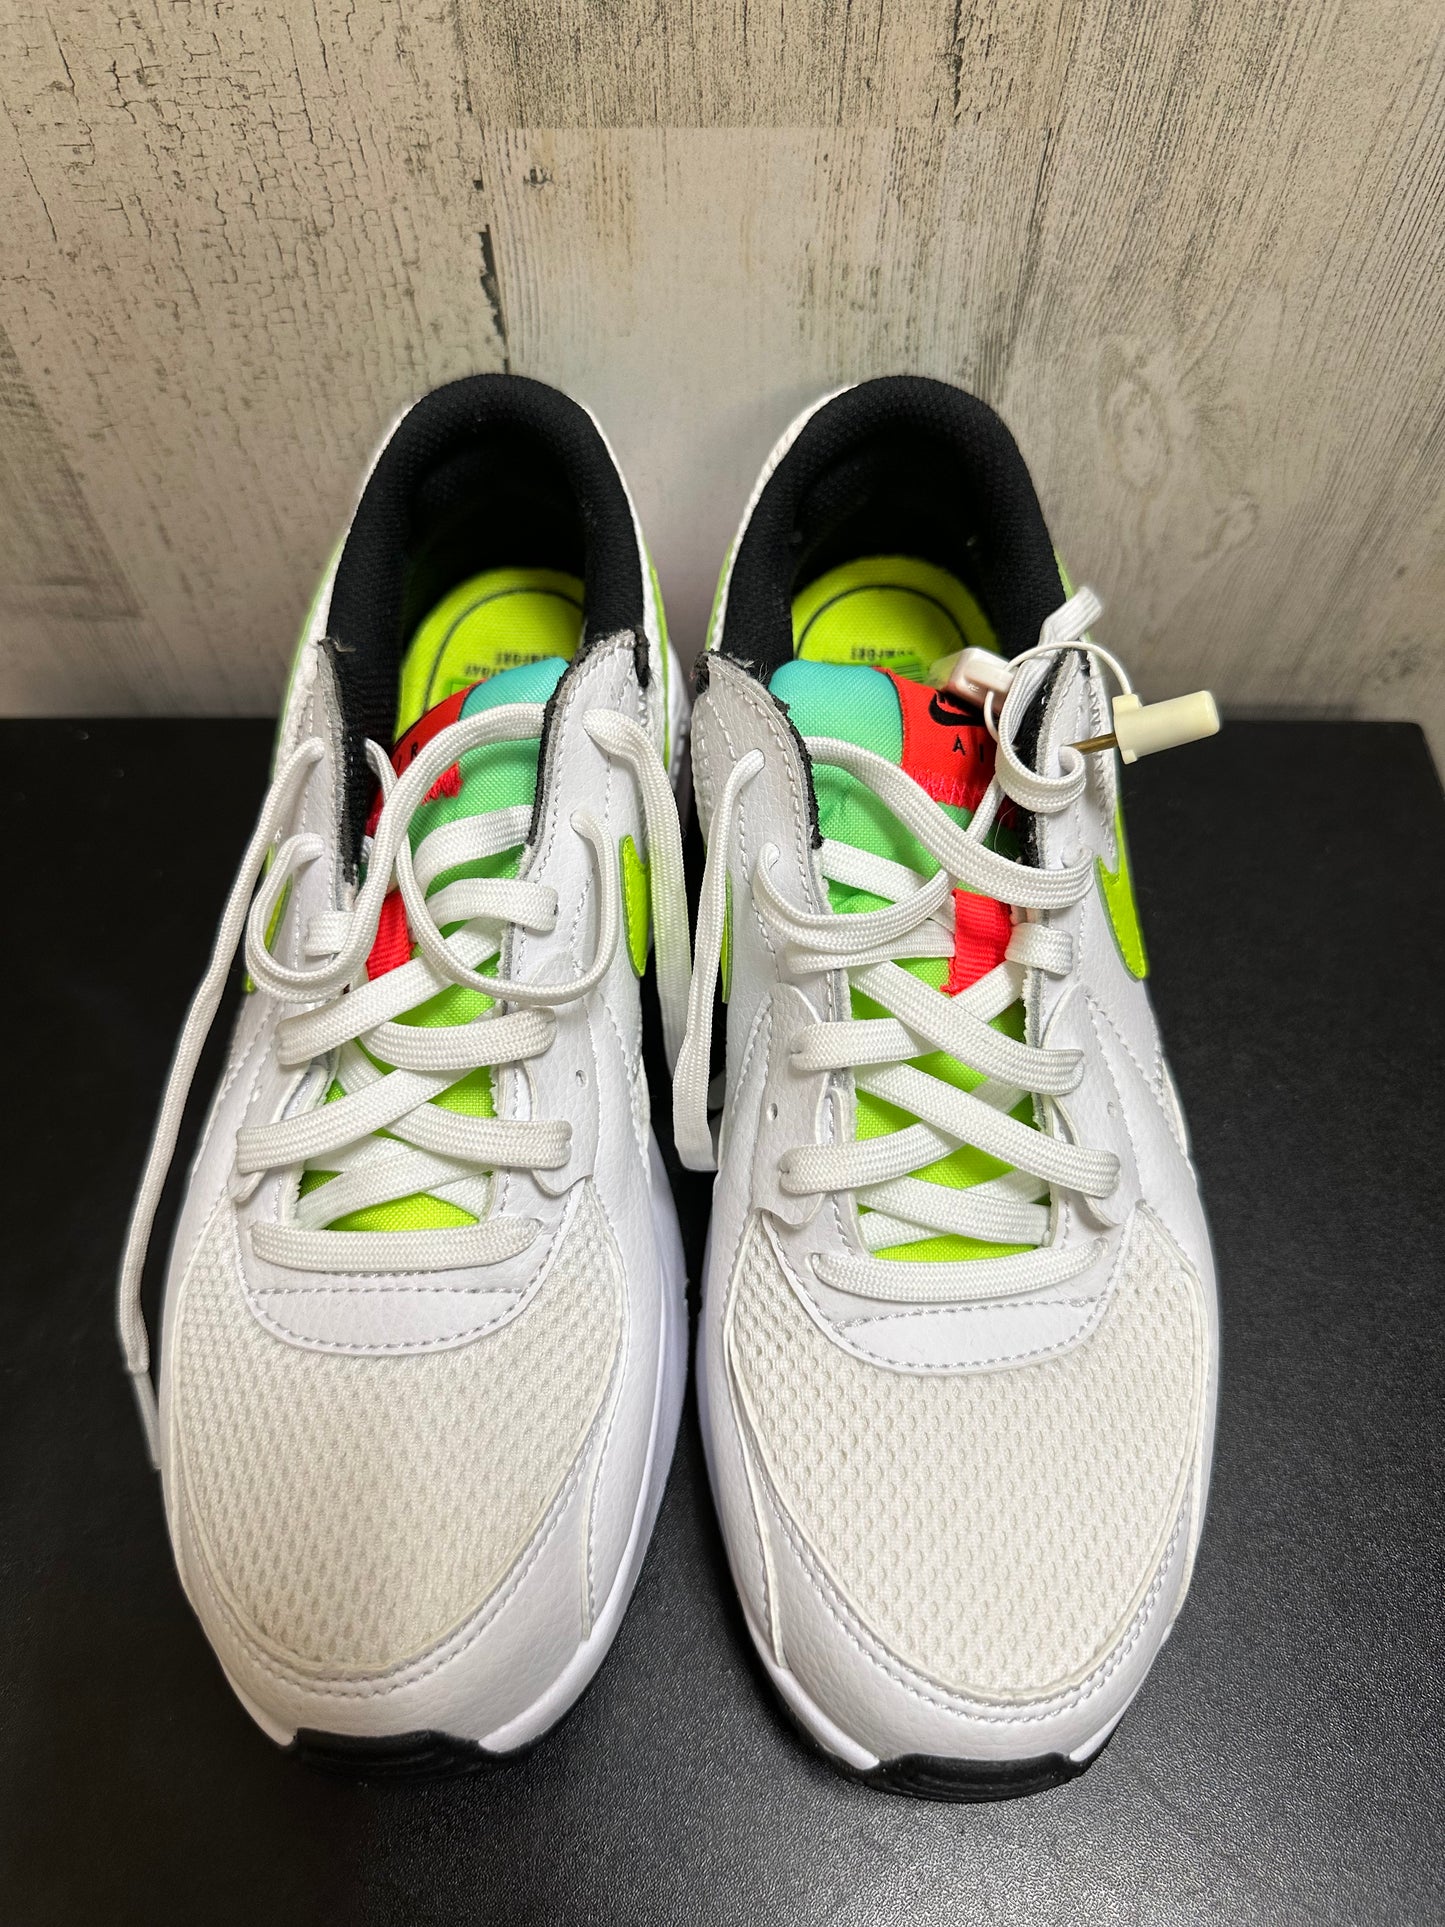 Green & Orange Shoes Sneakers Nike, Size 6